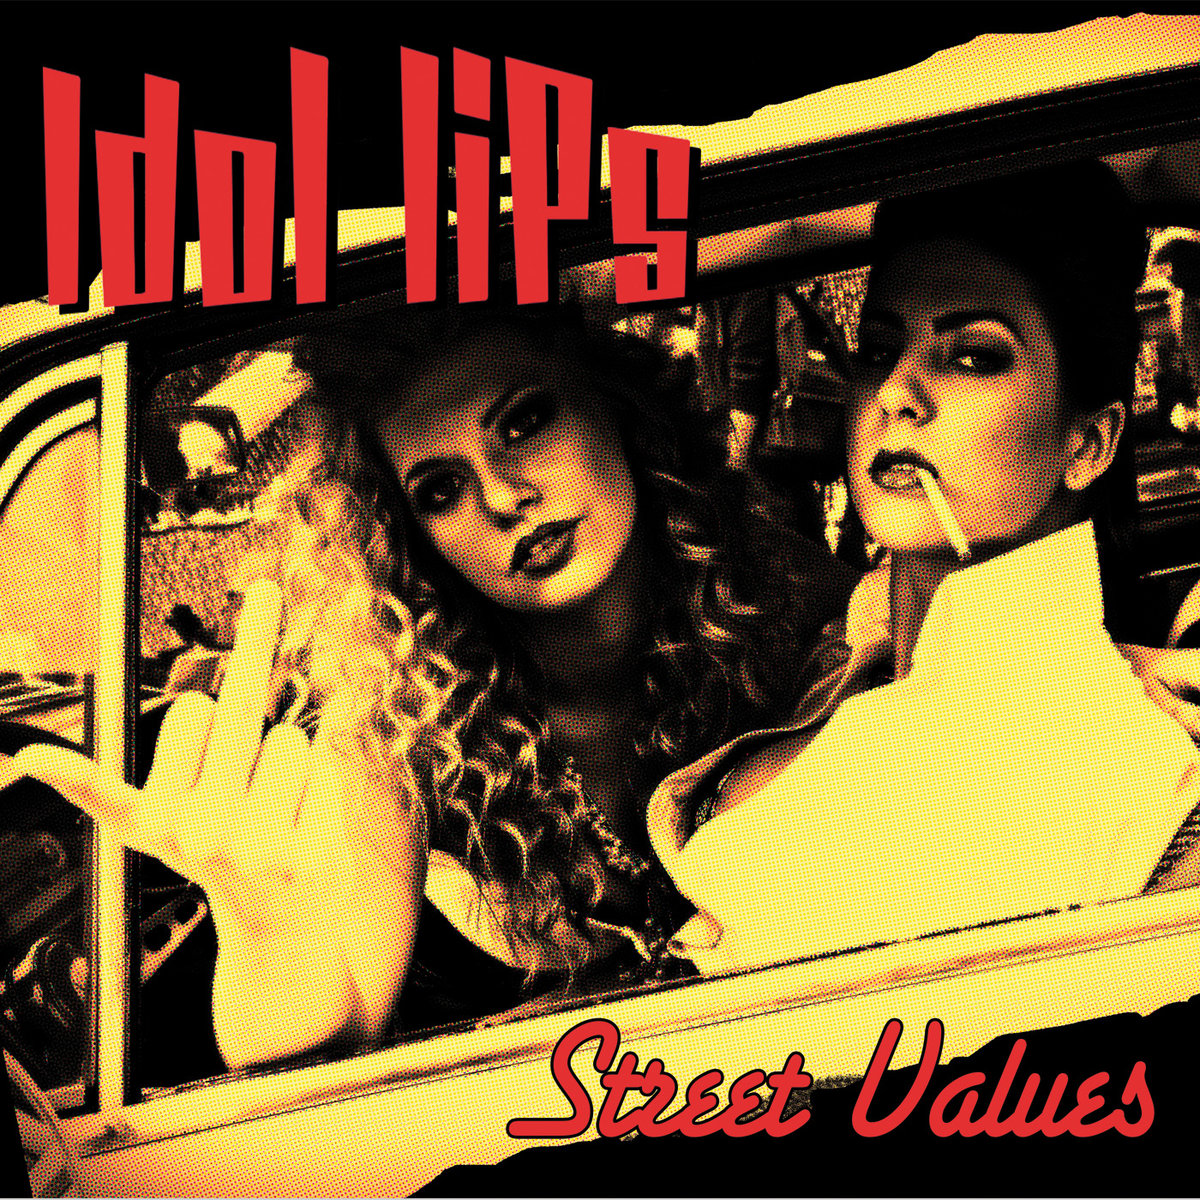 Idol Lips- Street Values LP ~WANDA RECORDS!